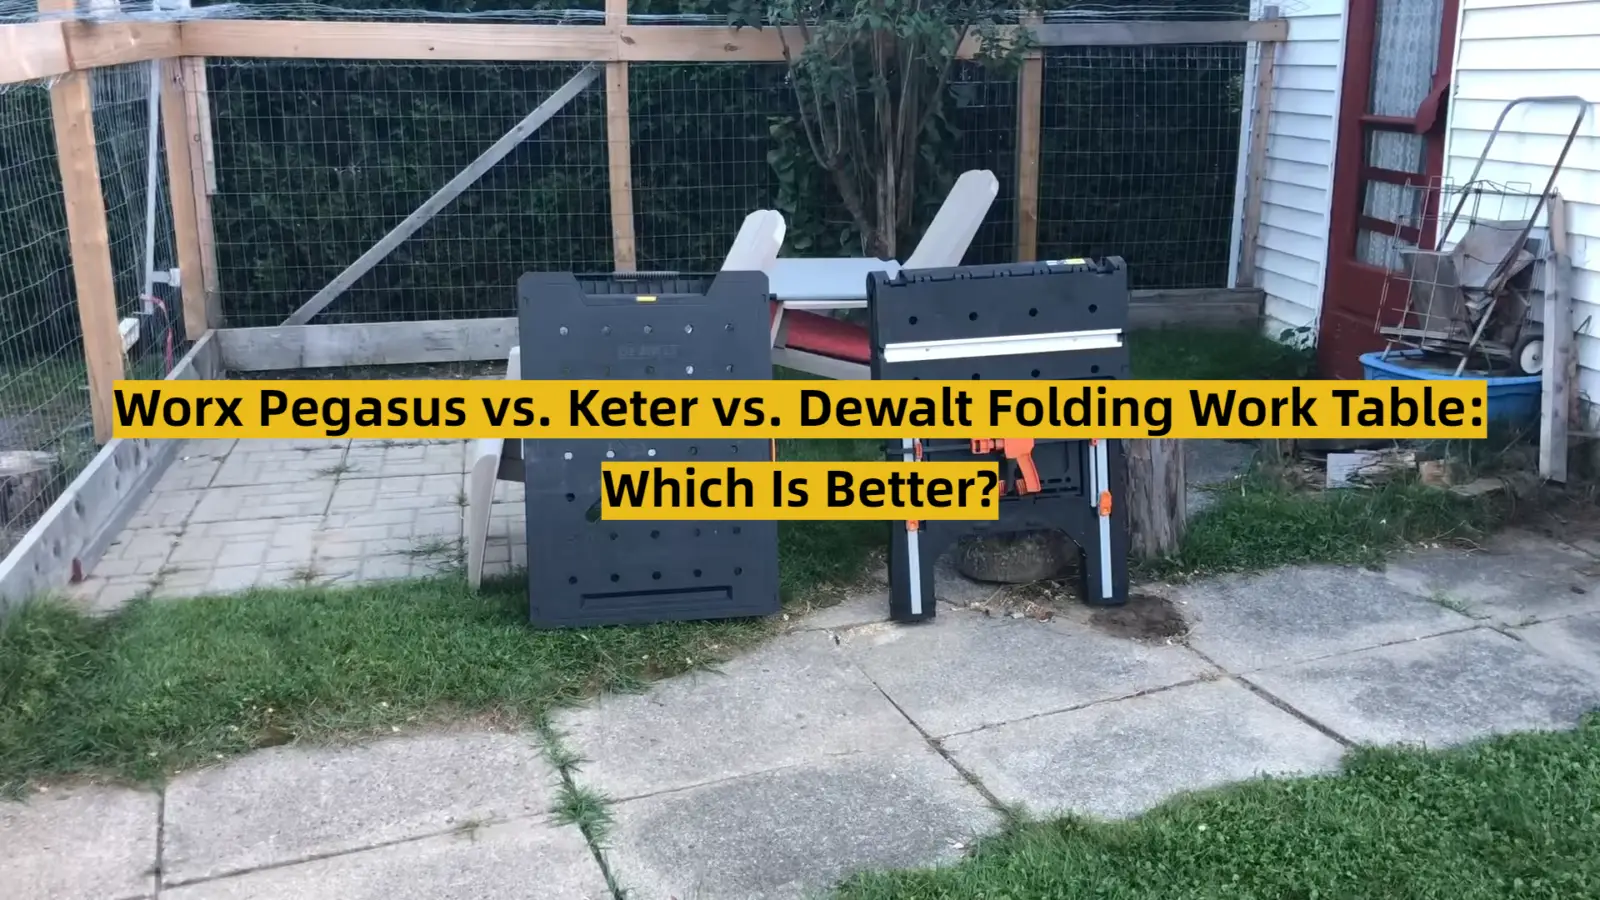 Worx Pegasus vs. Keter vs. Dewalt Folding Work Table: Which Is Better?